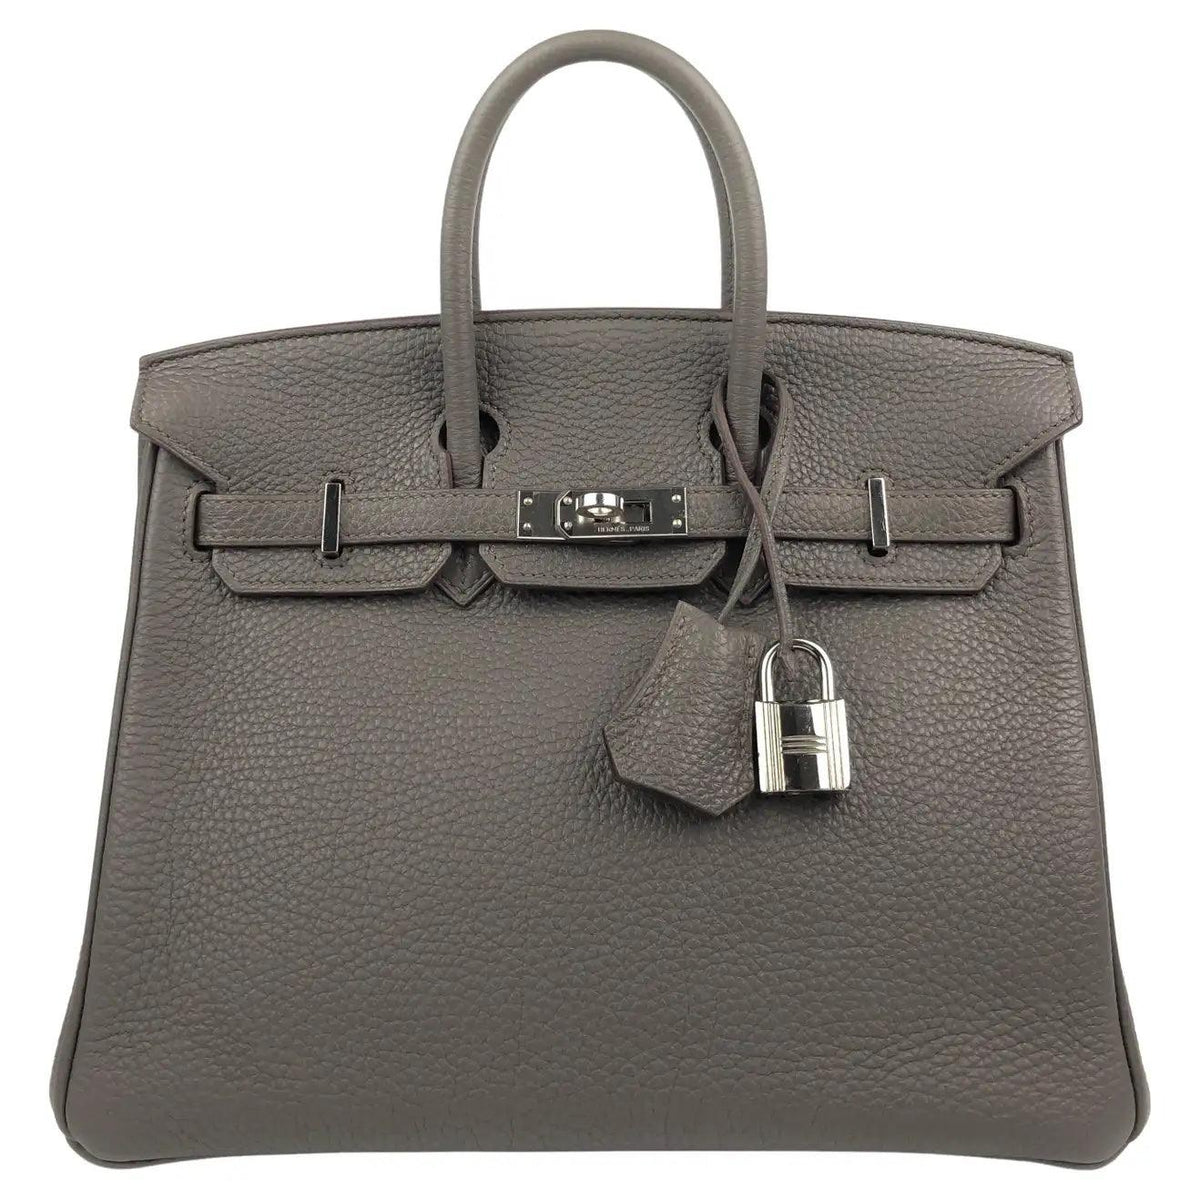 Rare Hermes Birkin 25 Etain Gray Togo Leather Bag